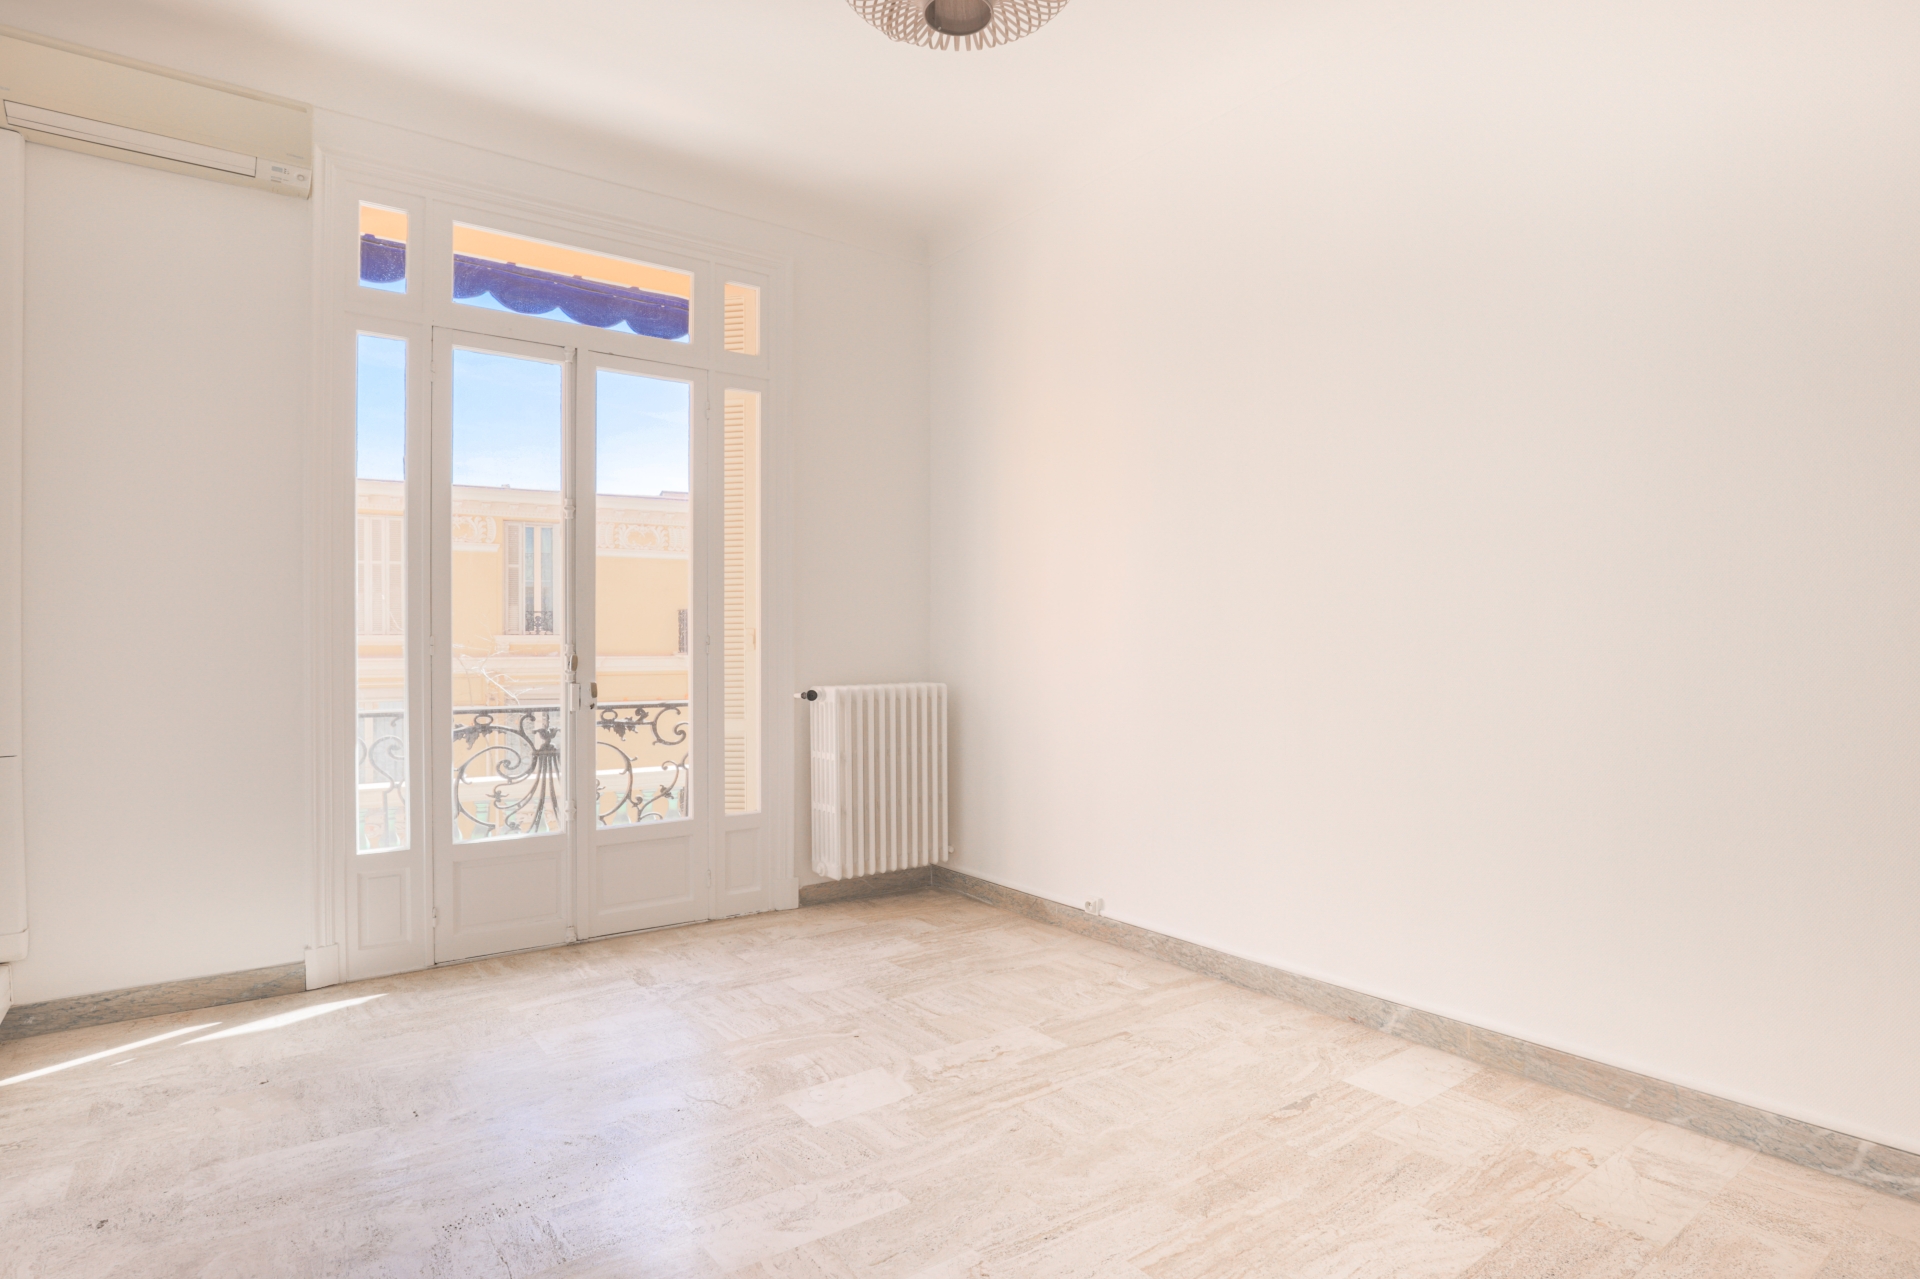 Dotta Appartement de 5 pieces a vendre - BEL AZUR - La Condamine - Monaco - img4